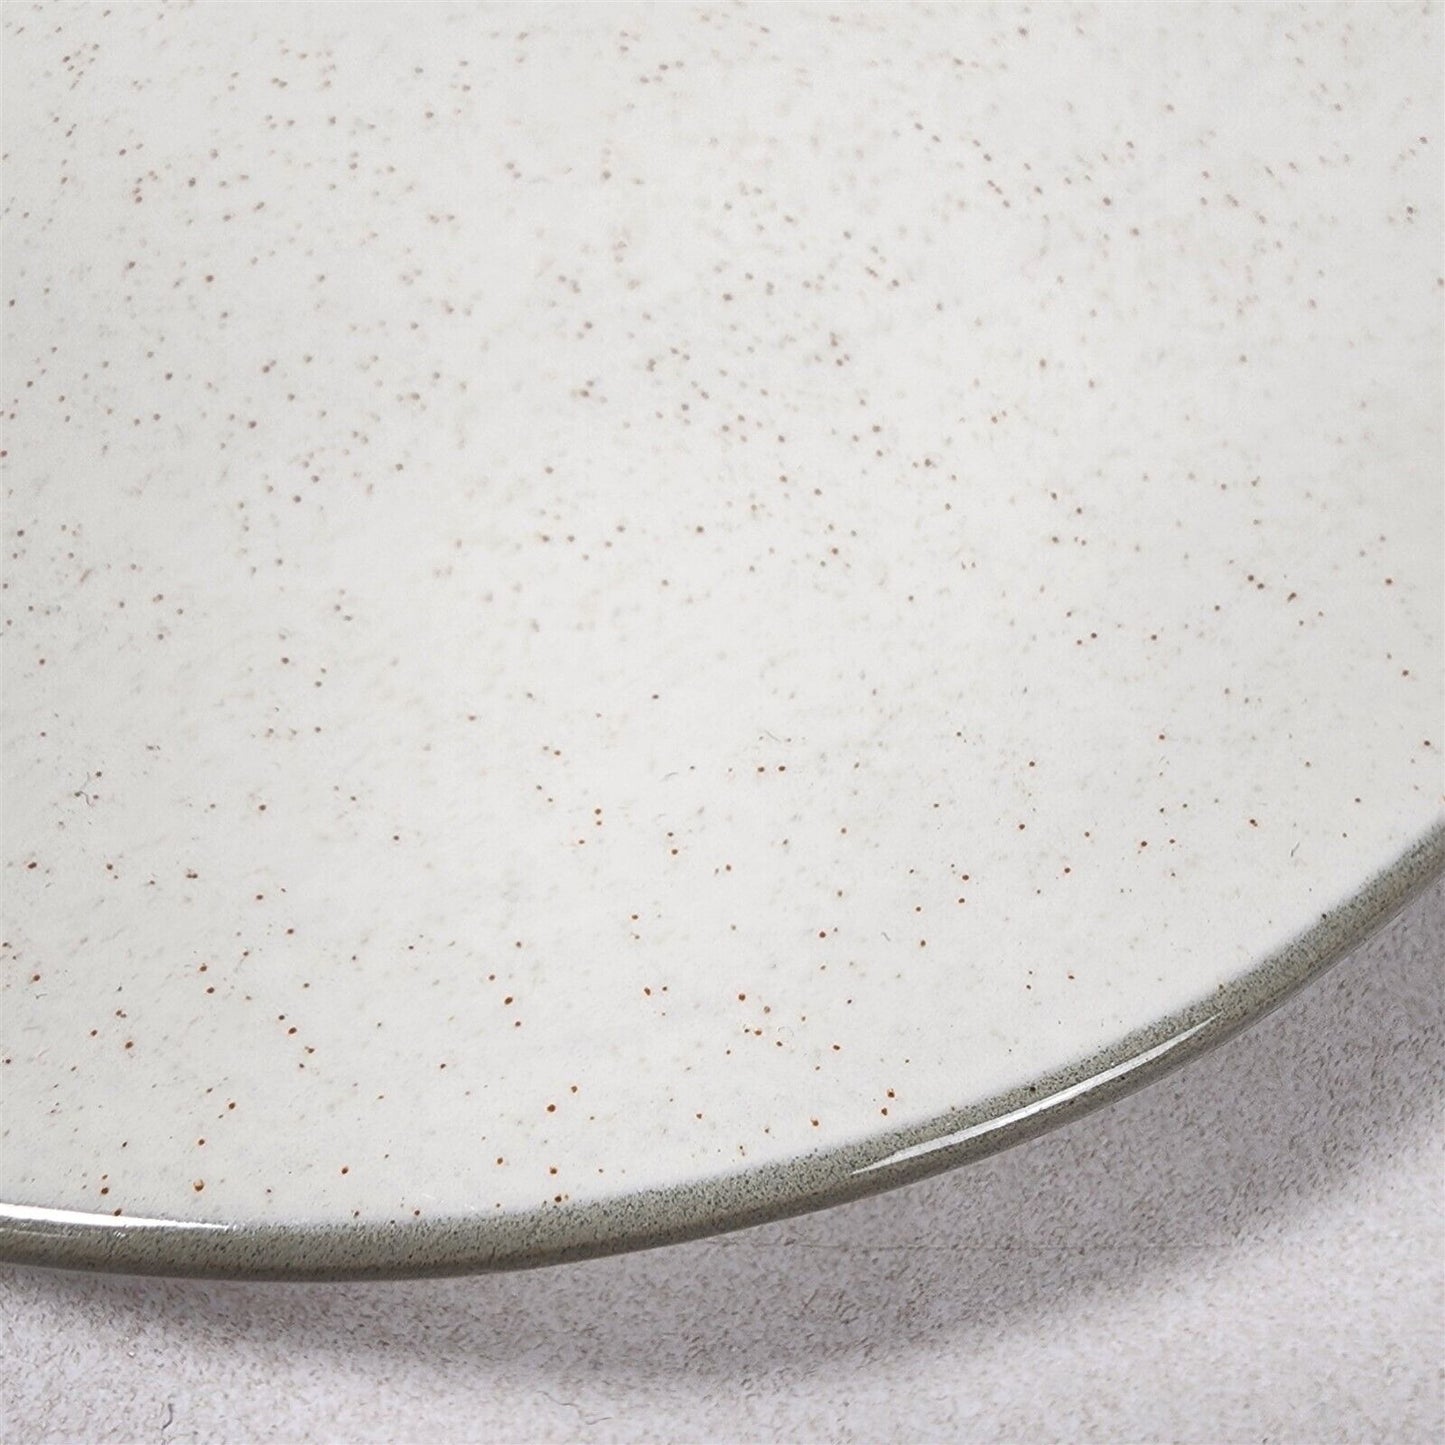 Vintage Harkerware Stoneware Speckled White Gray Serving Platter - 9.75" x 11.5"